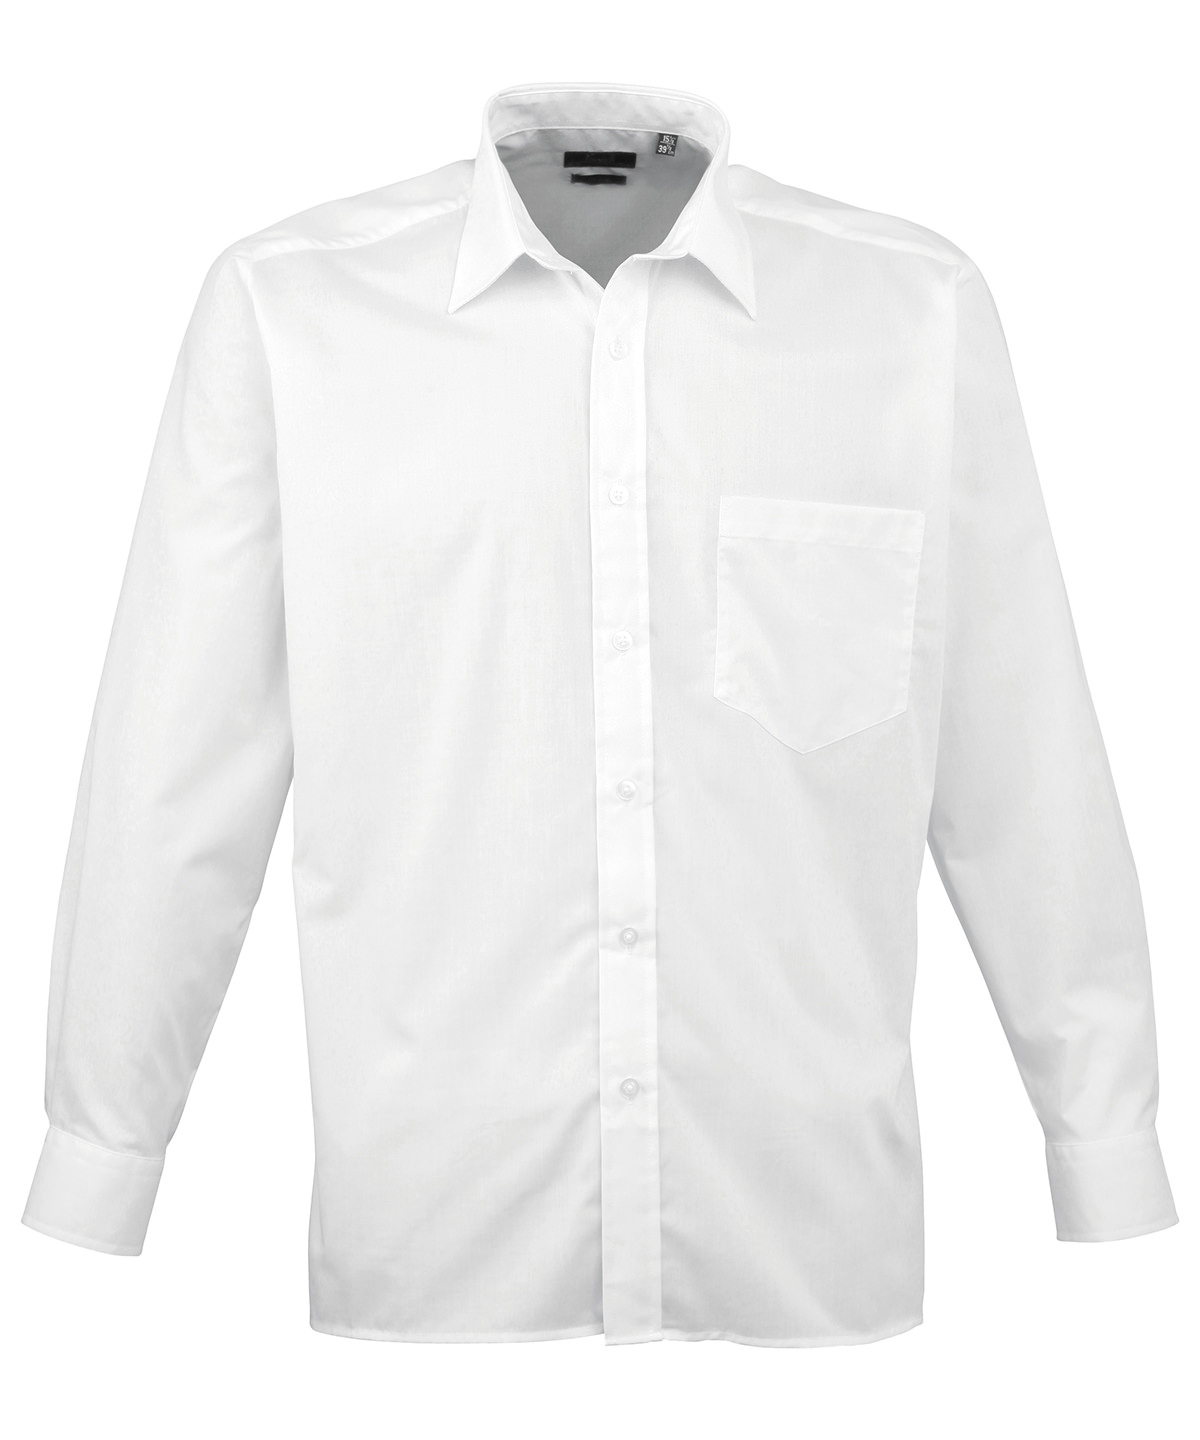 Ideal 365 | Pr200 long sleeve poplin shirt - white - 15.5